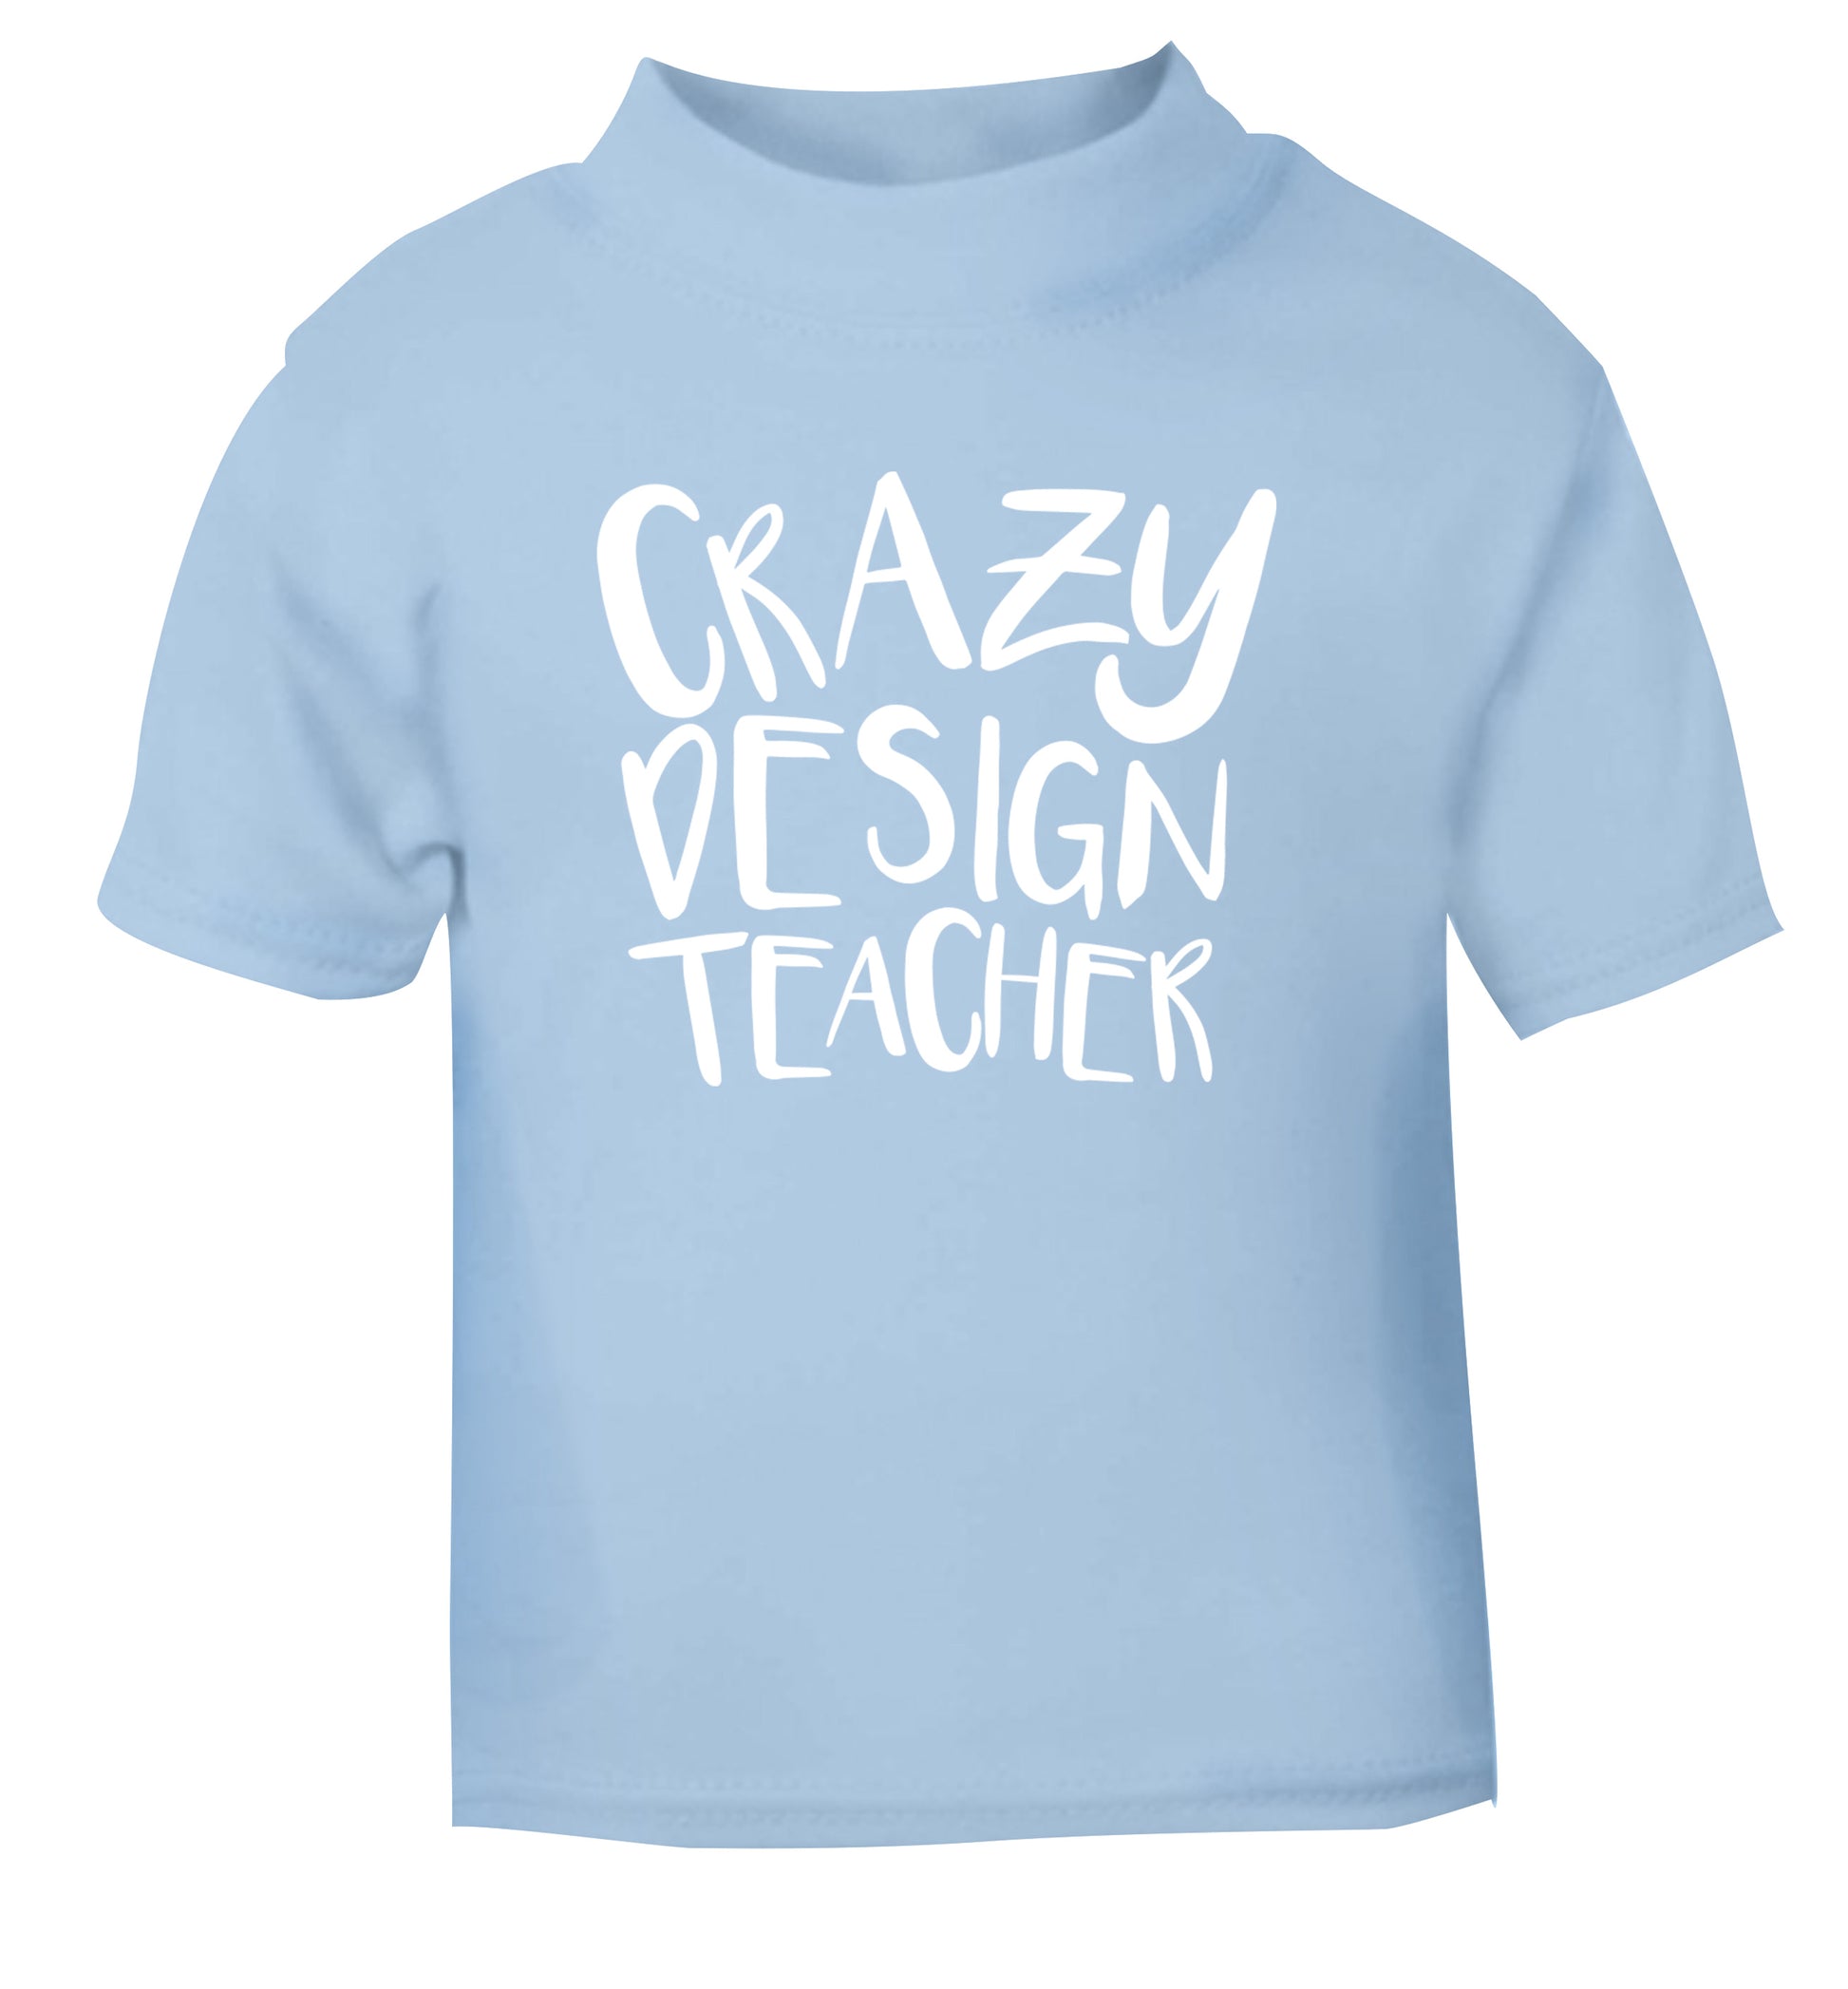 Crazy design teacher light blue Baby Toddler Tshirt 2 Years